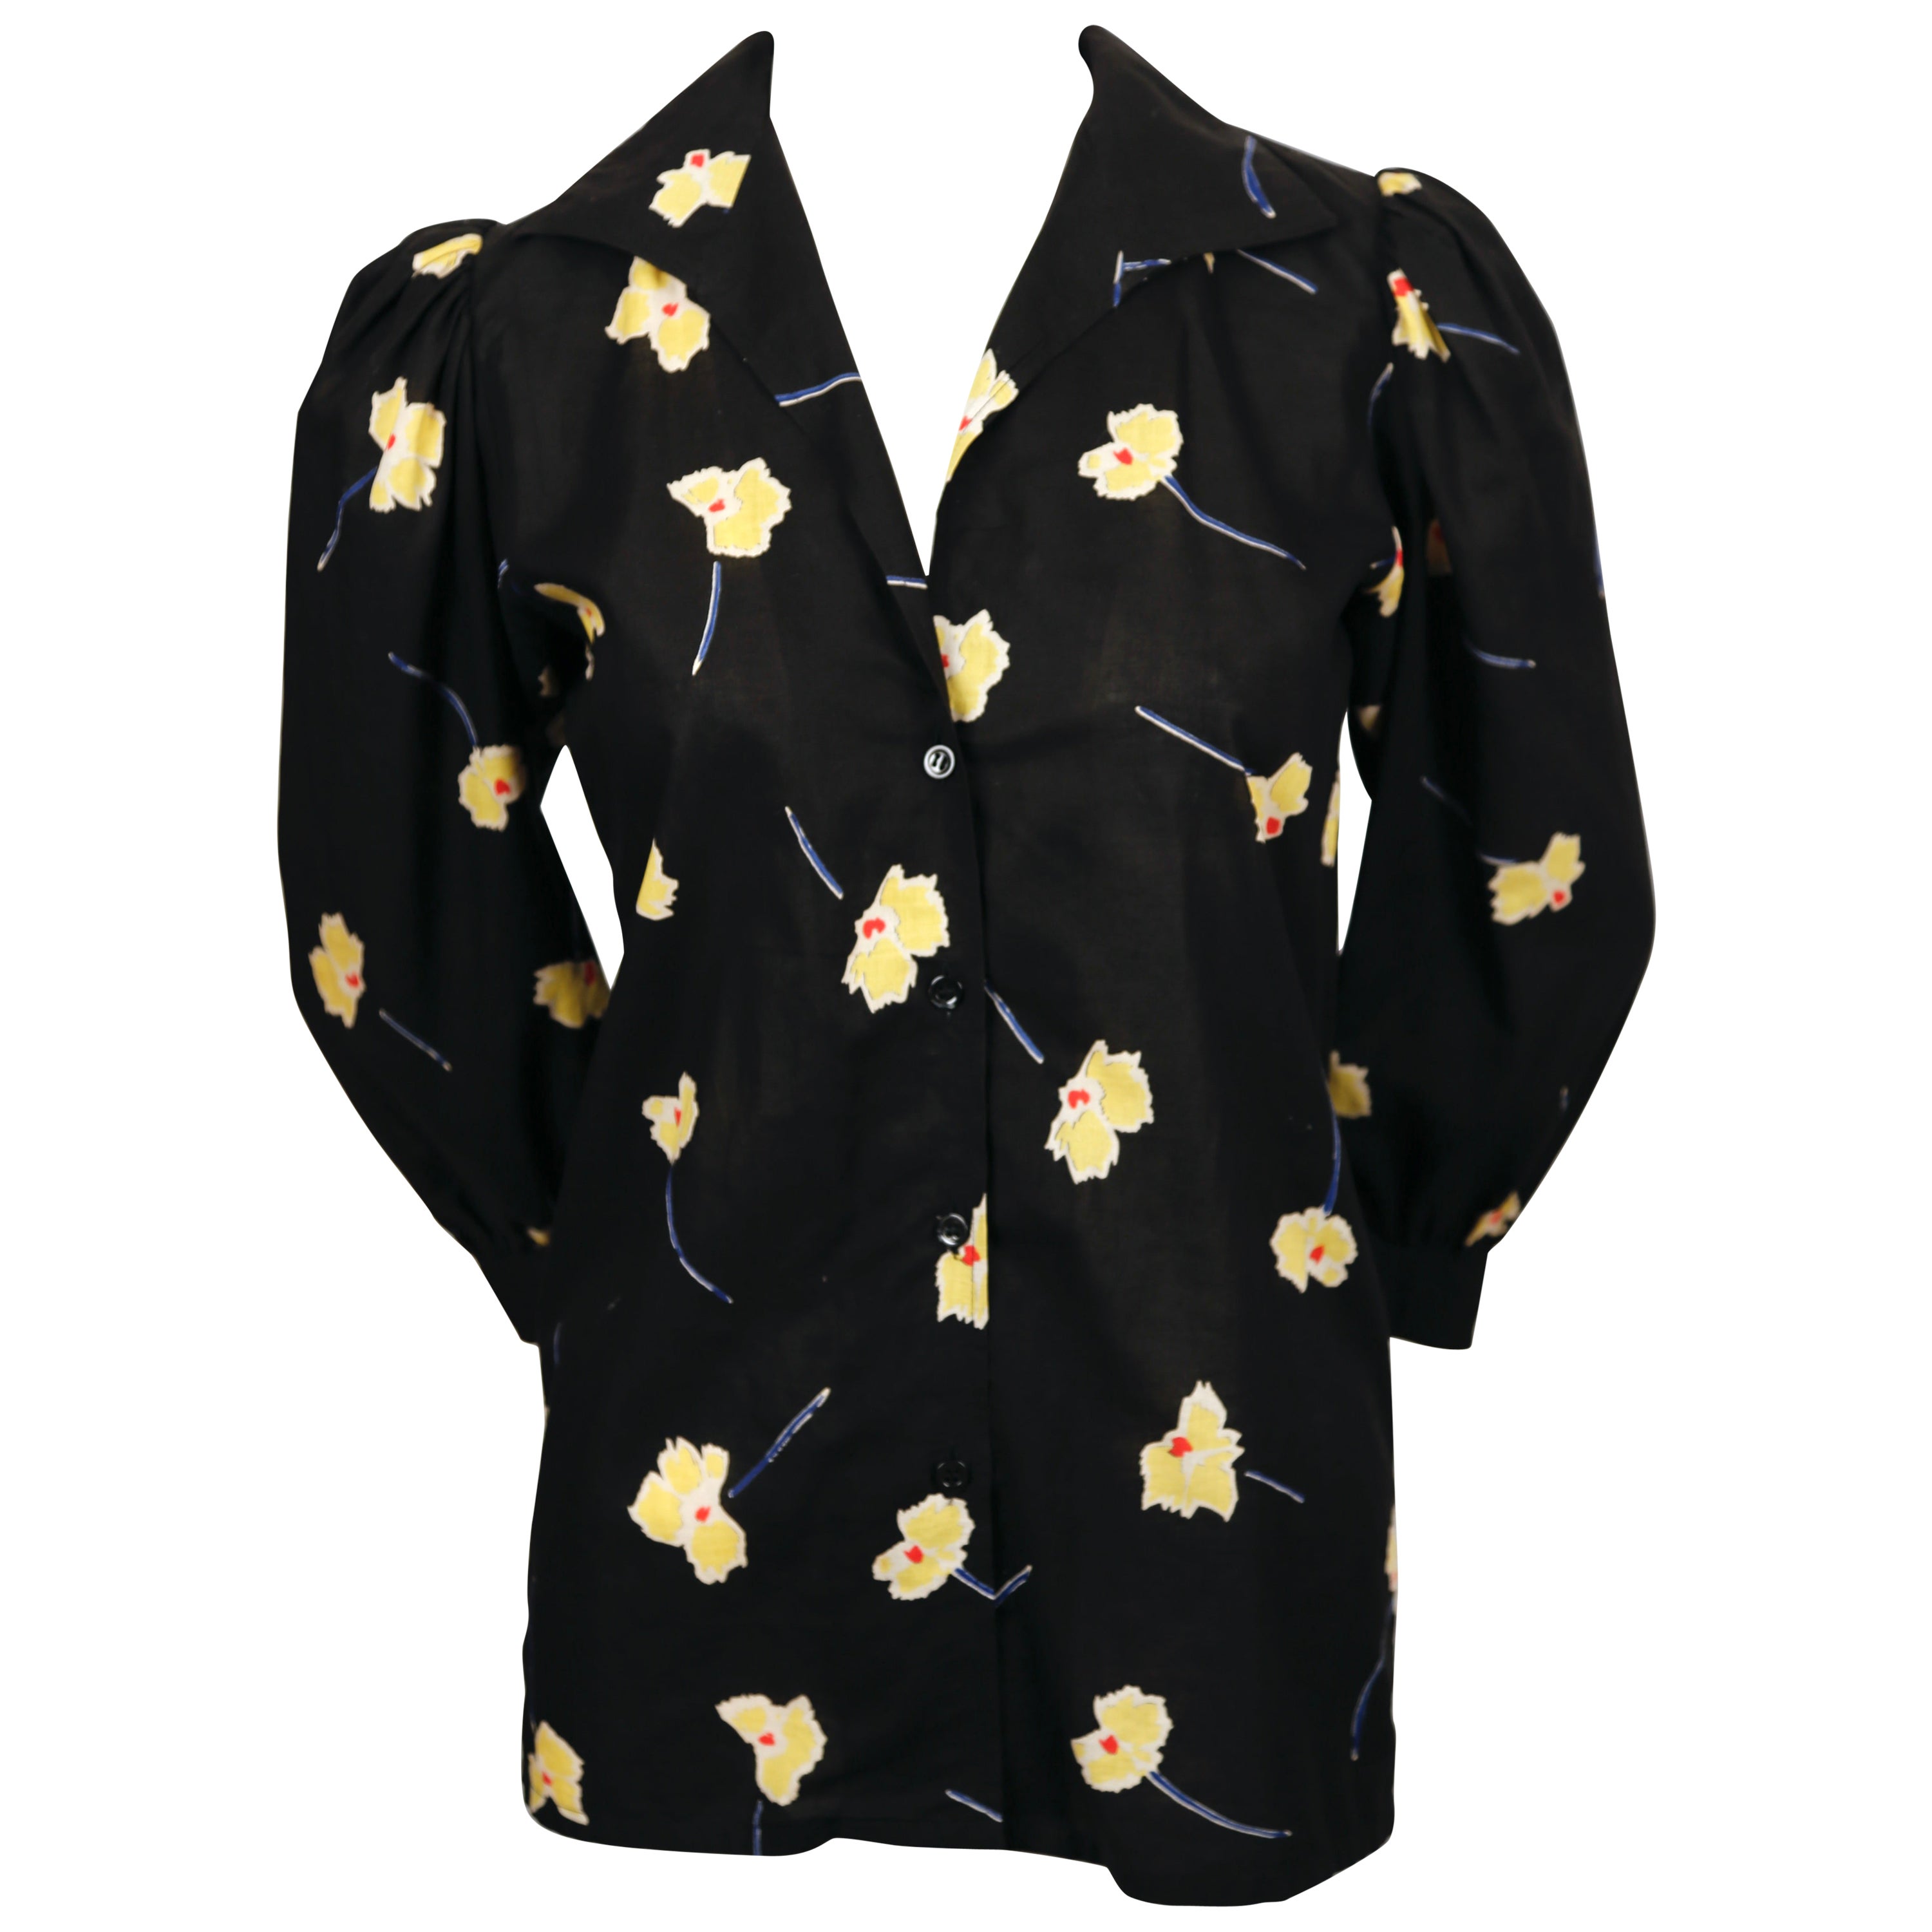 1980's YVES SAINT LAURENT black cotton blouse with poppy print